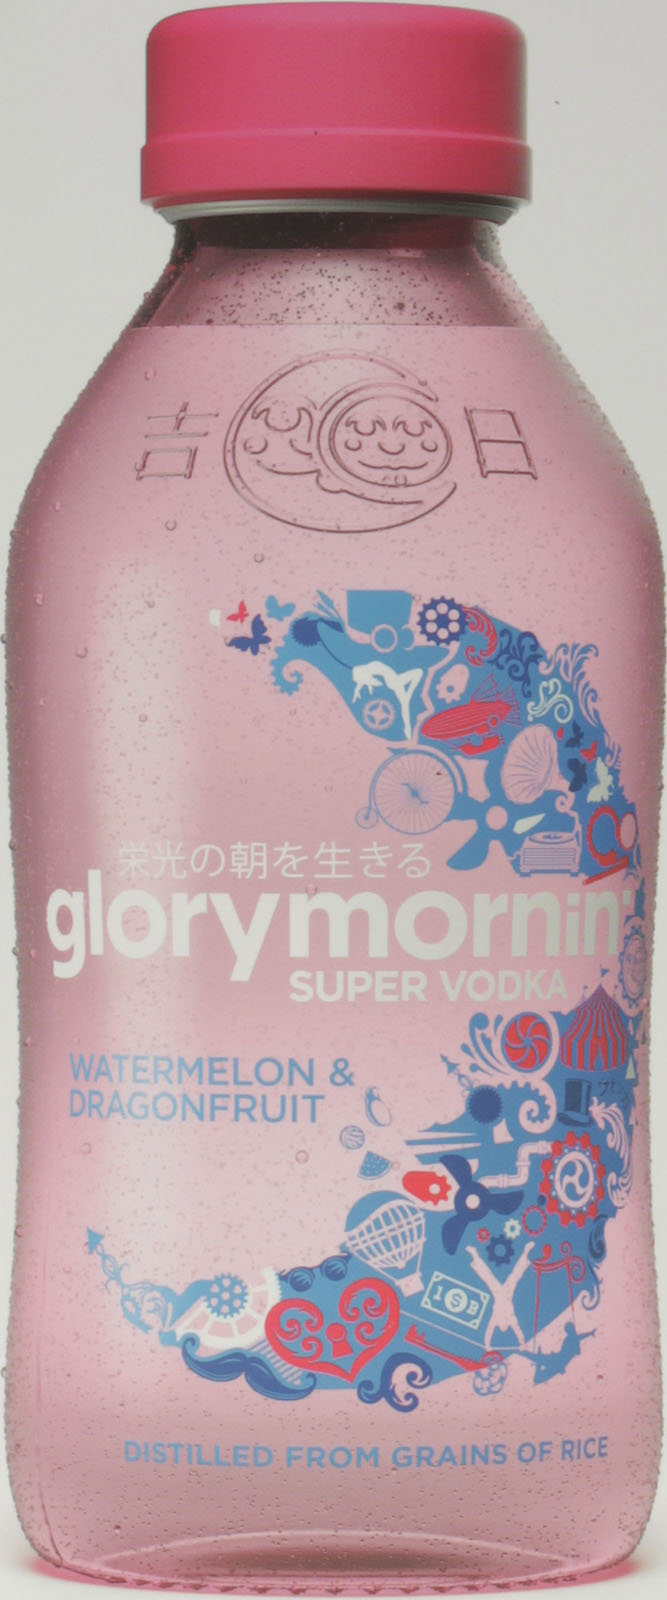 Glory Mornin Super im Dragonfruit Vodka Watermelone - 